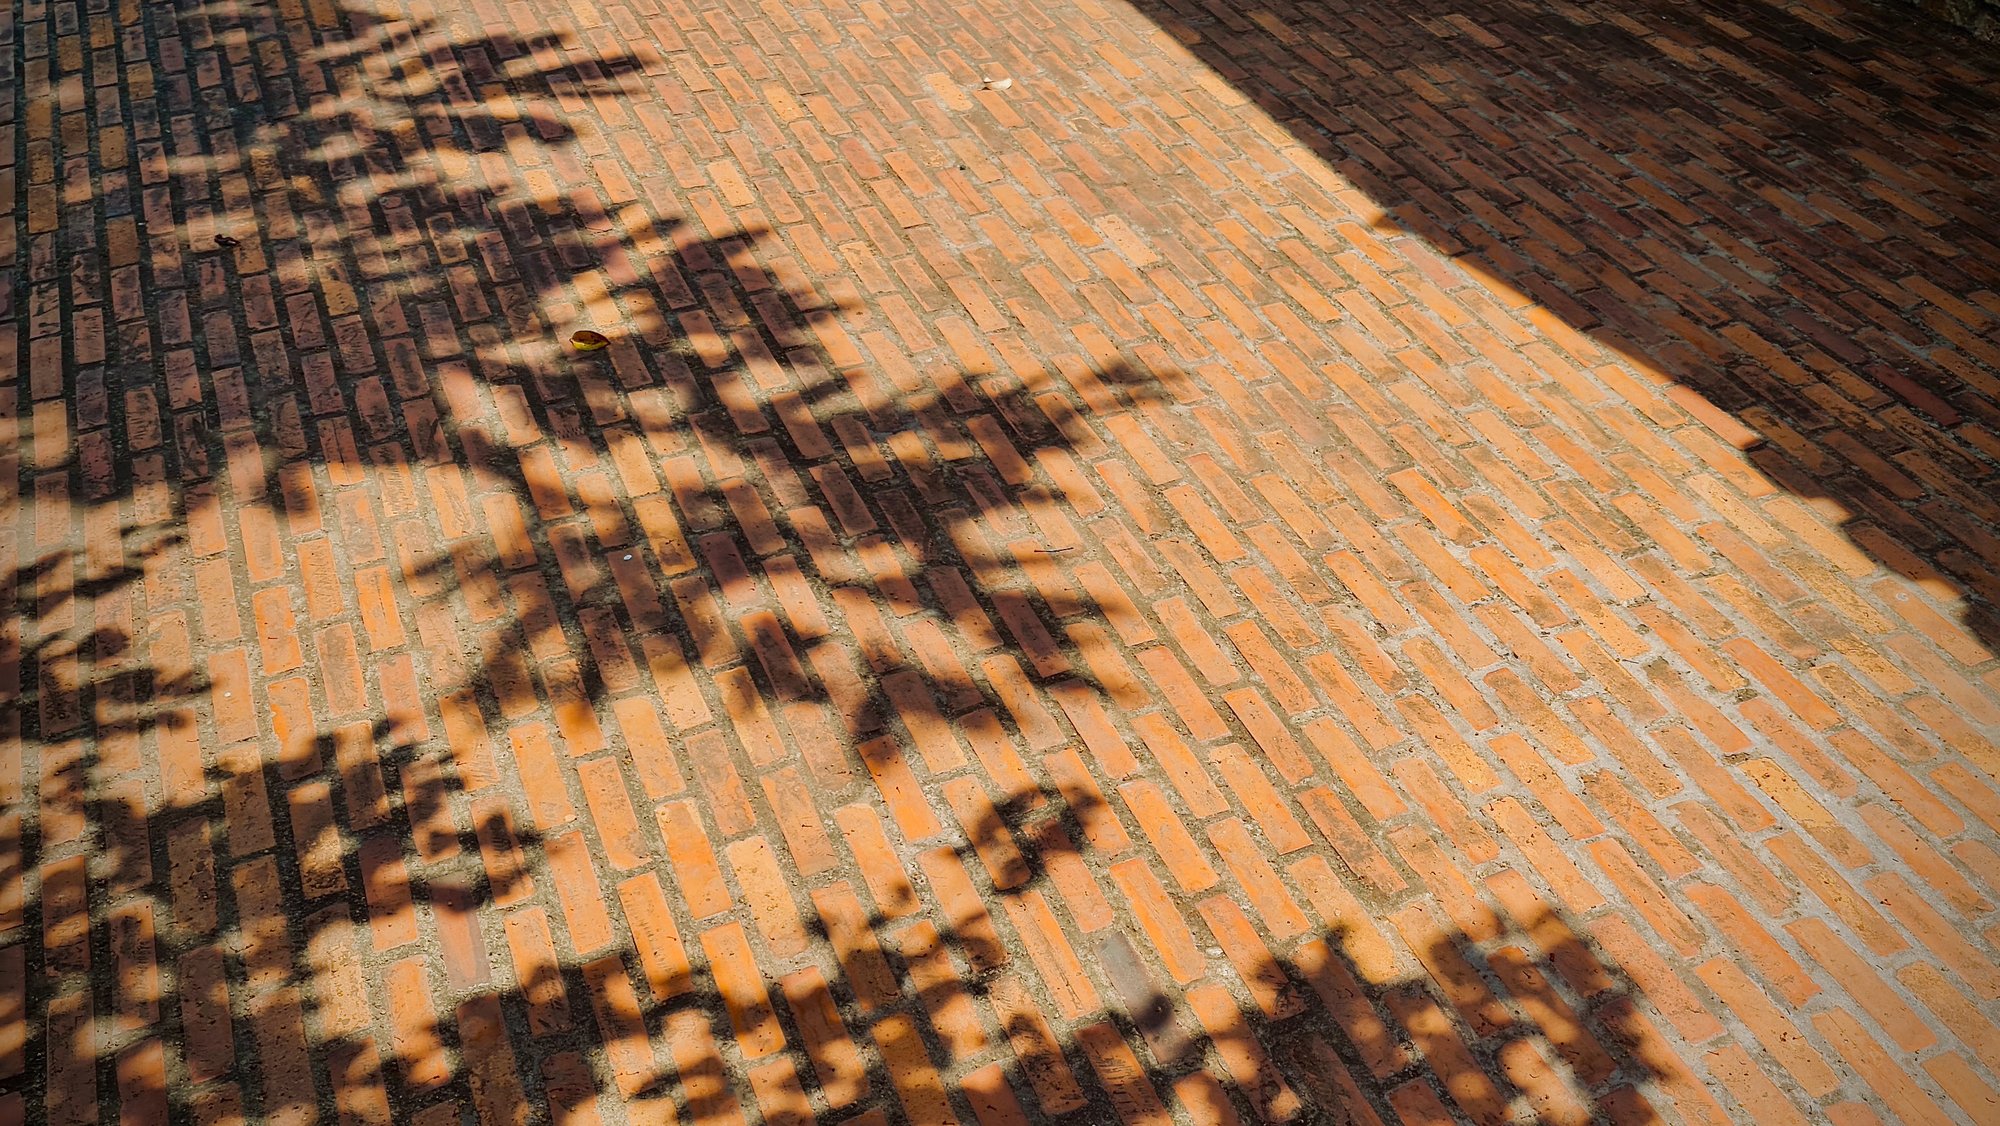 Leaves shadow on brick ground